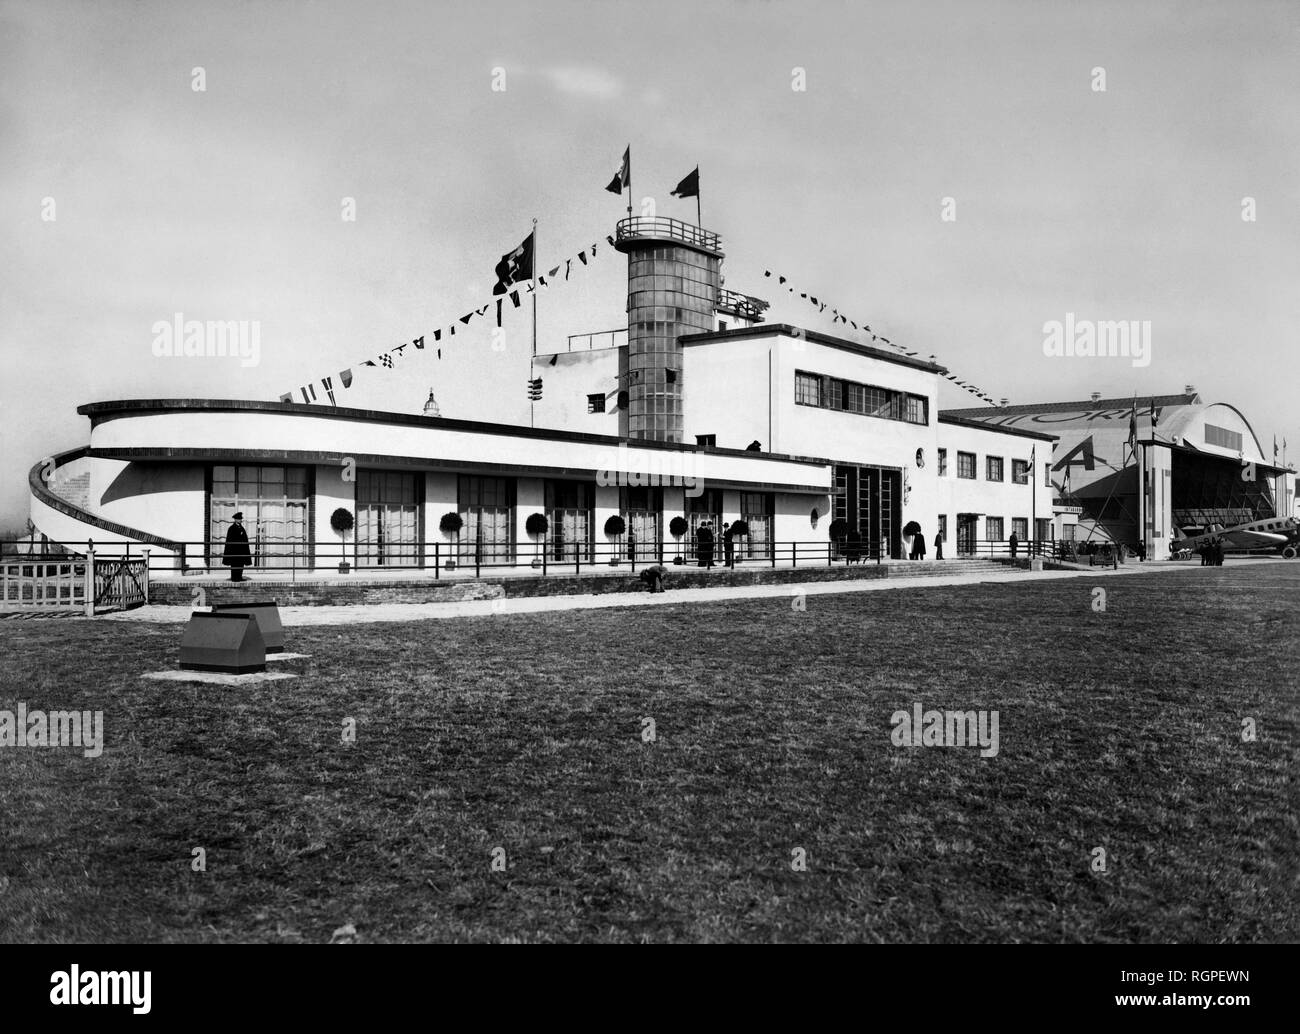 marco polo airport, venice 1935 Stock Photo